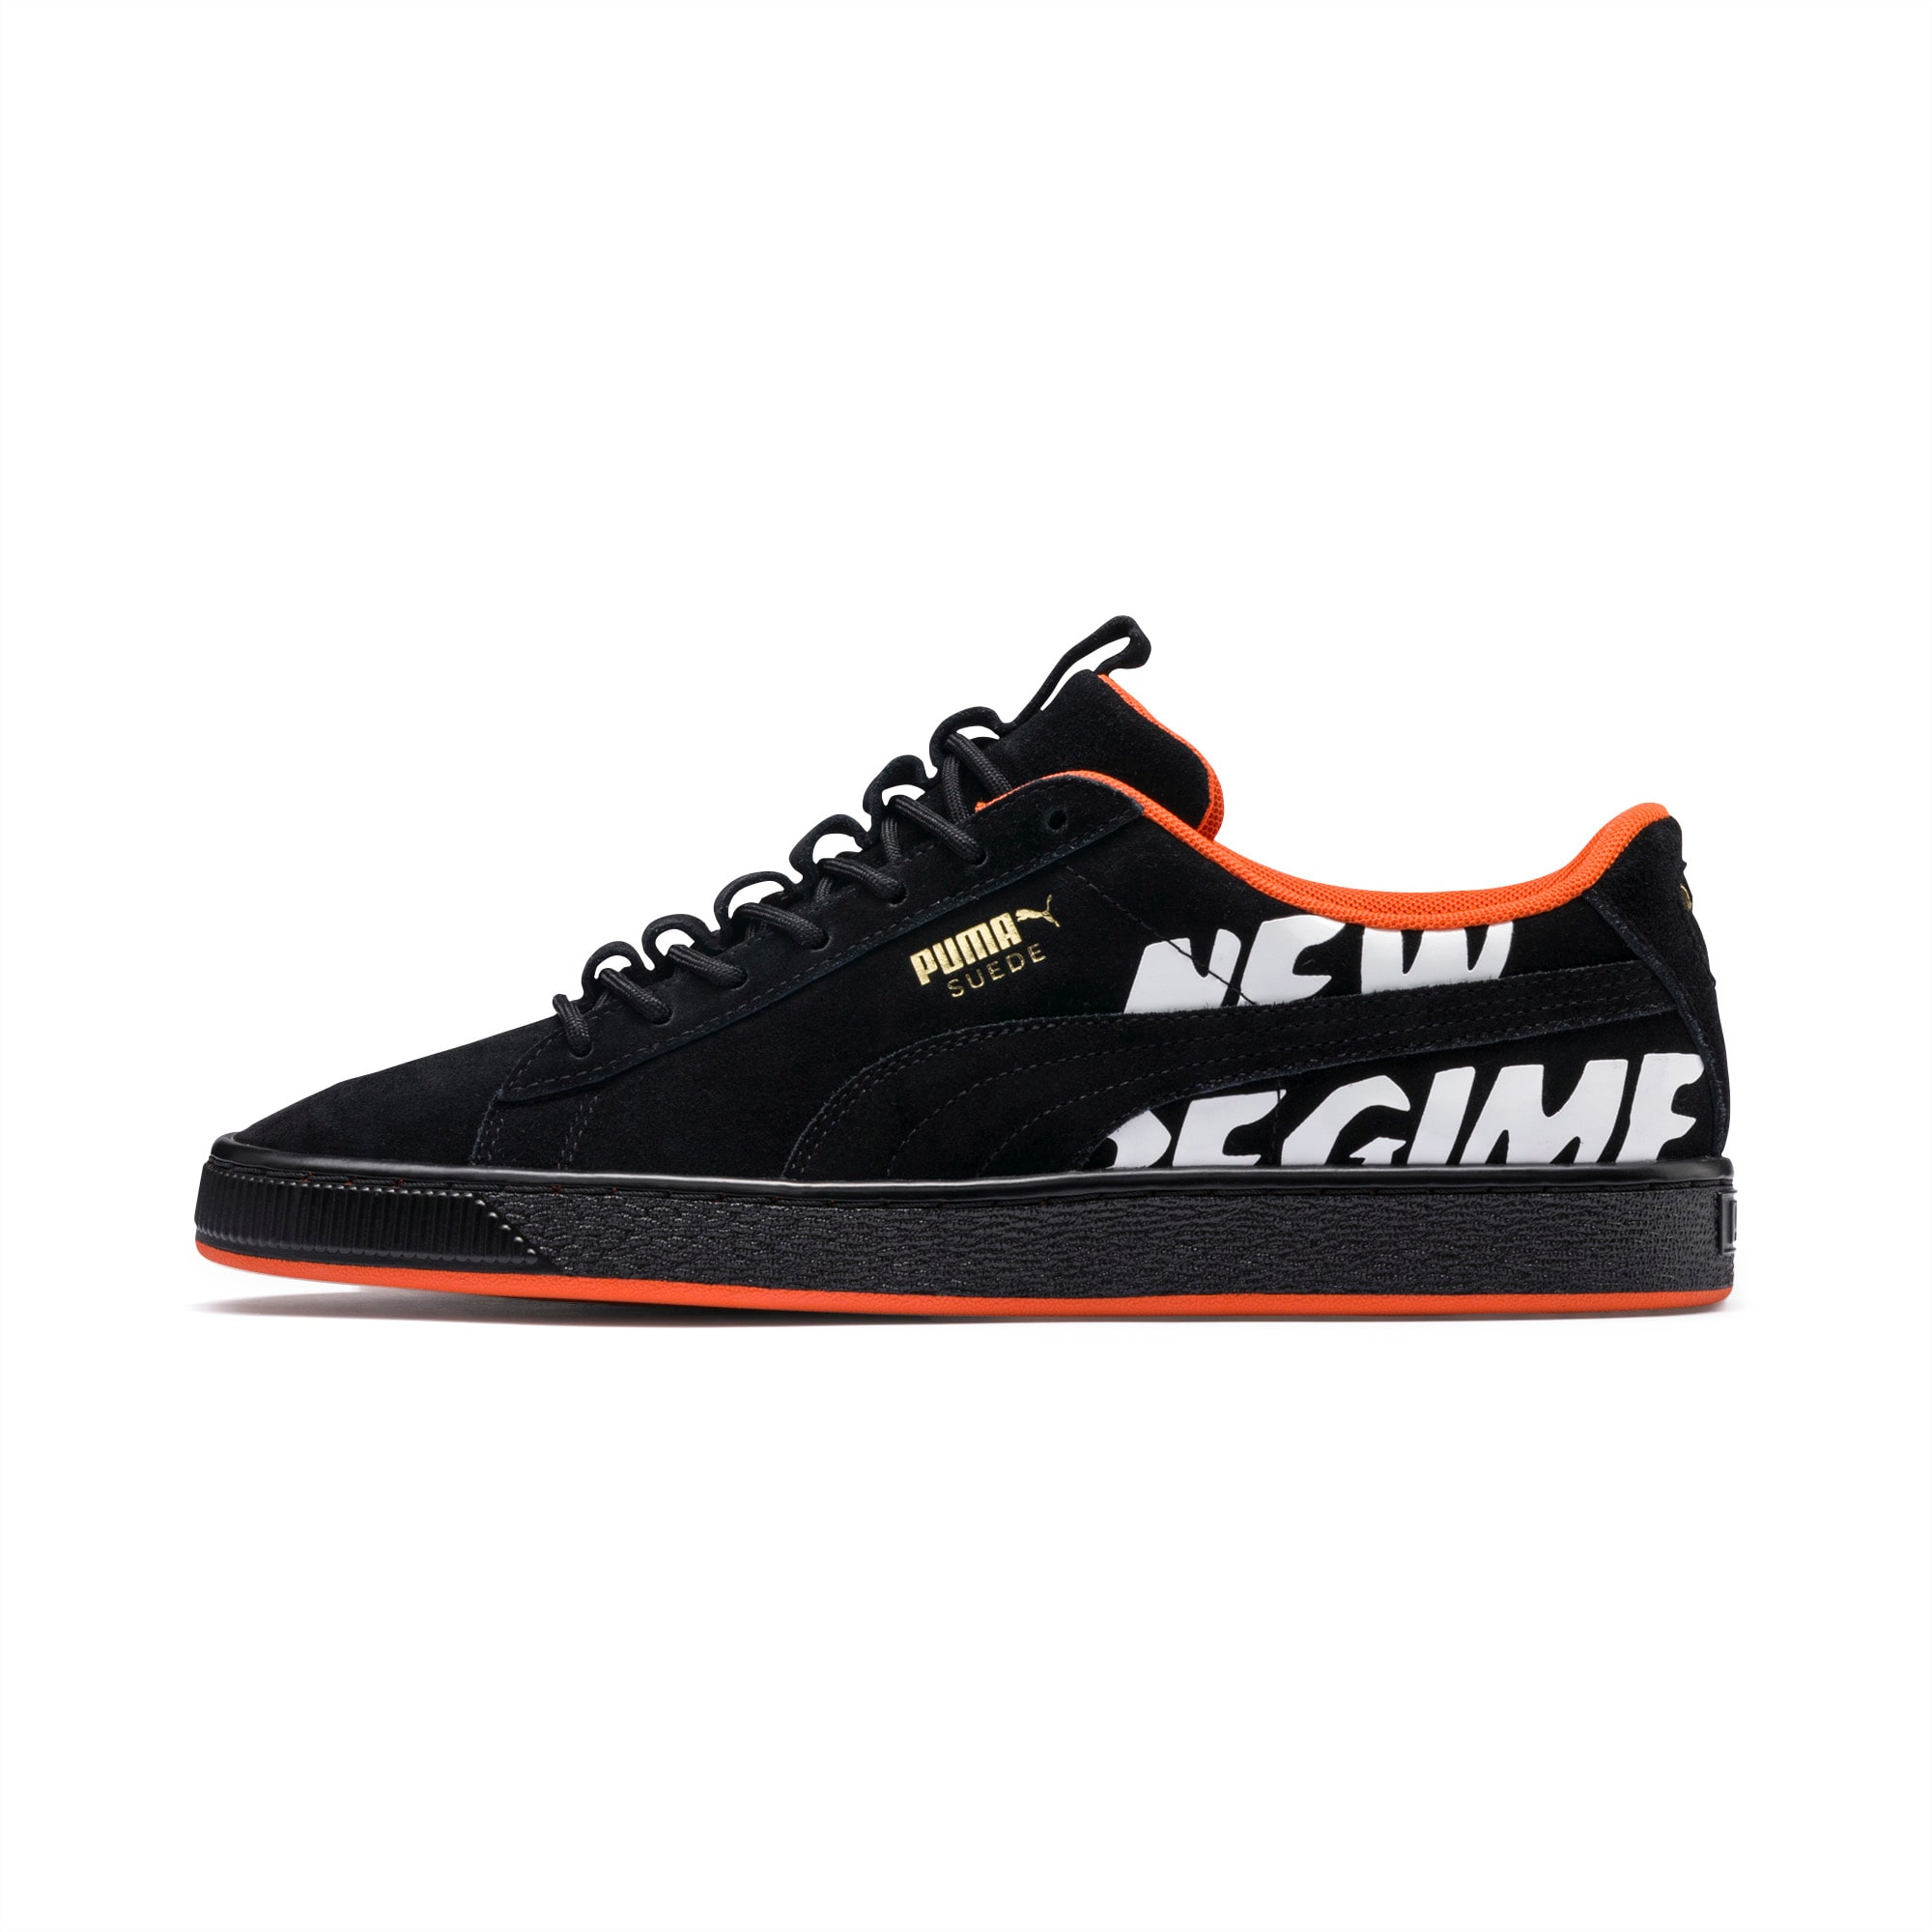 PUMA x ATELIER NEW REGIME Suede Sneakers | PUMA US